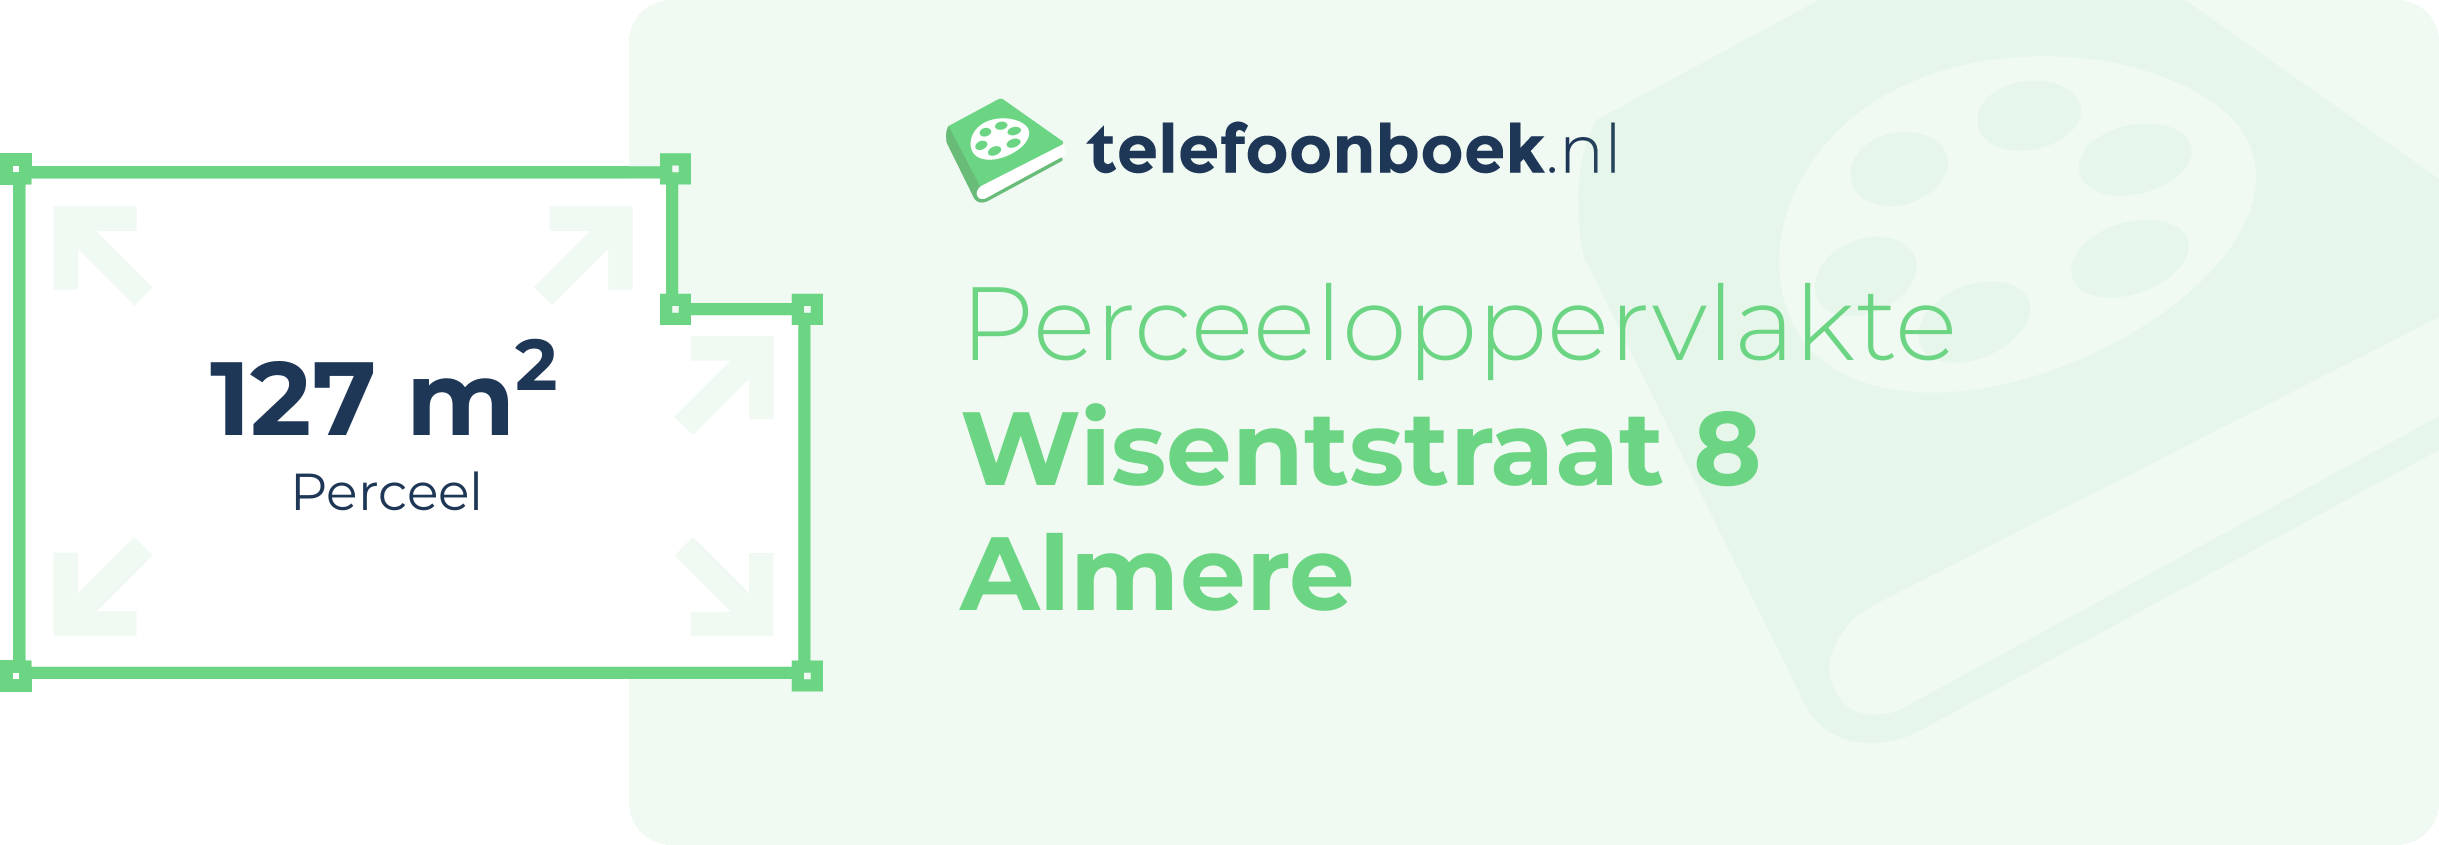 Perceeloppervlakte Wisentstraat 8 Almere